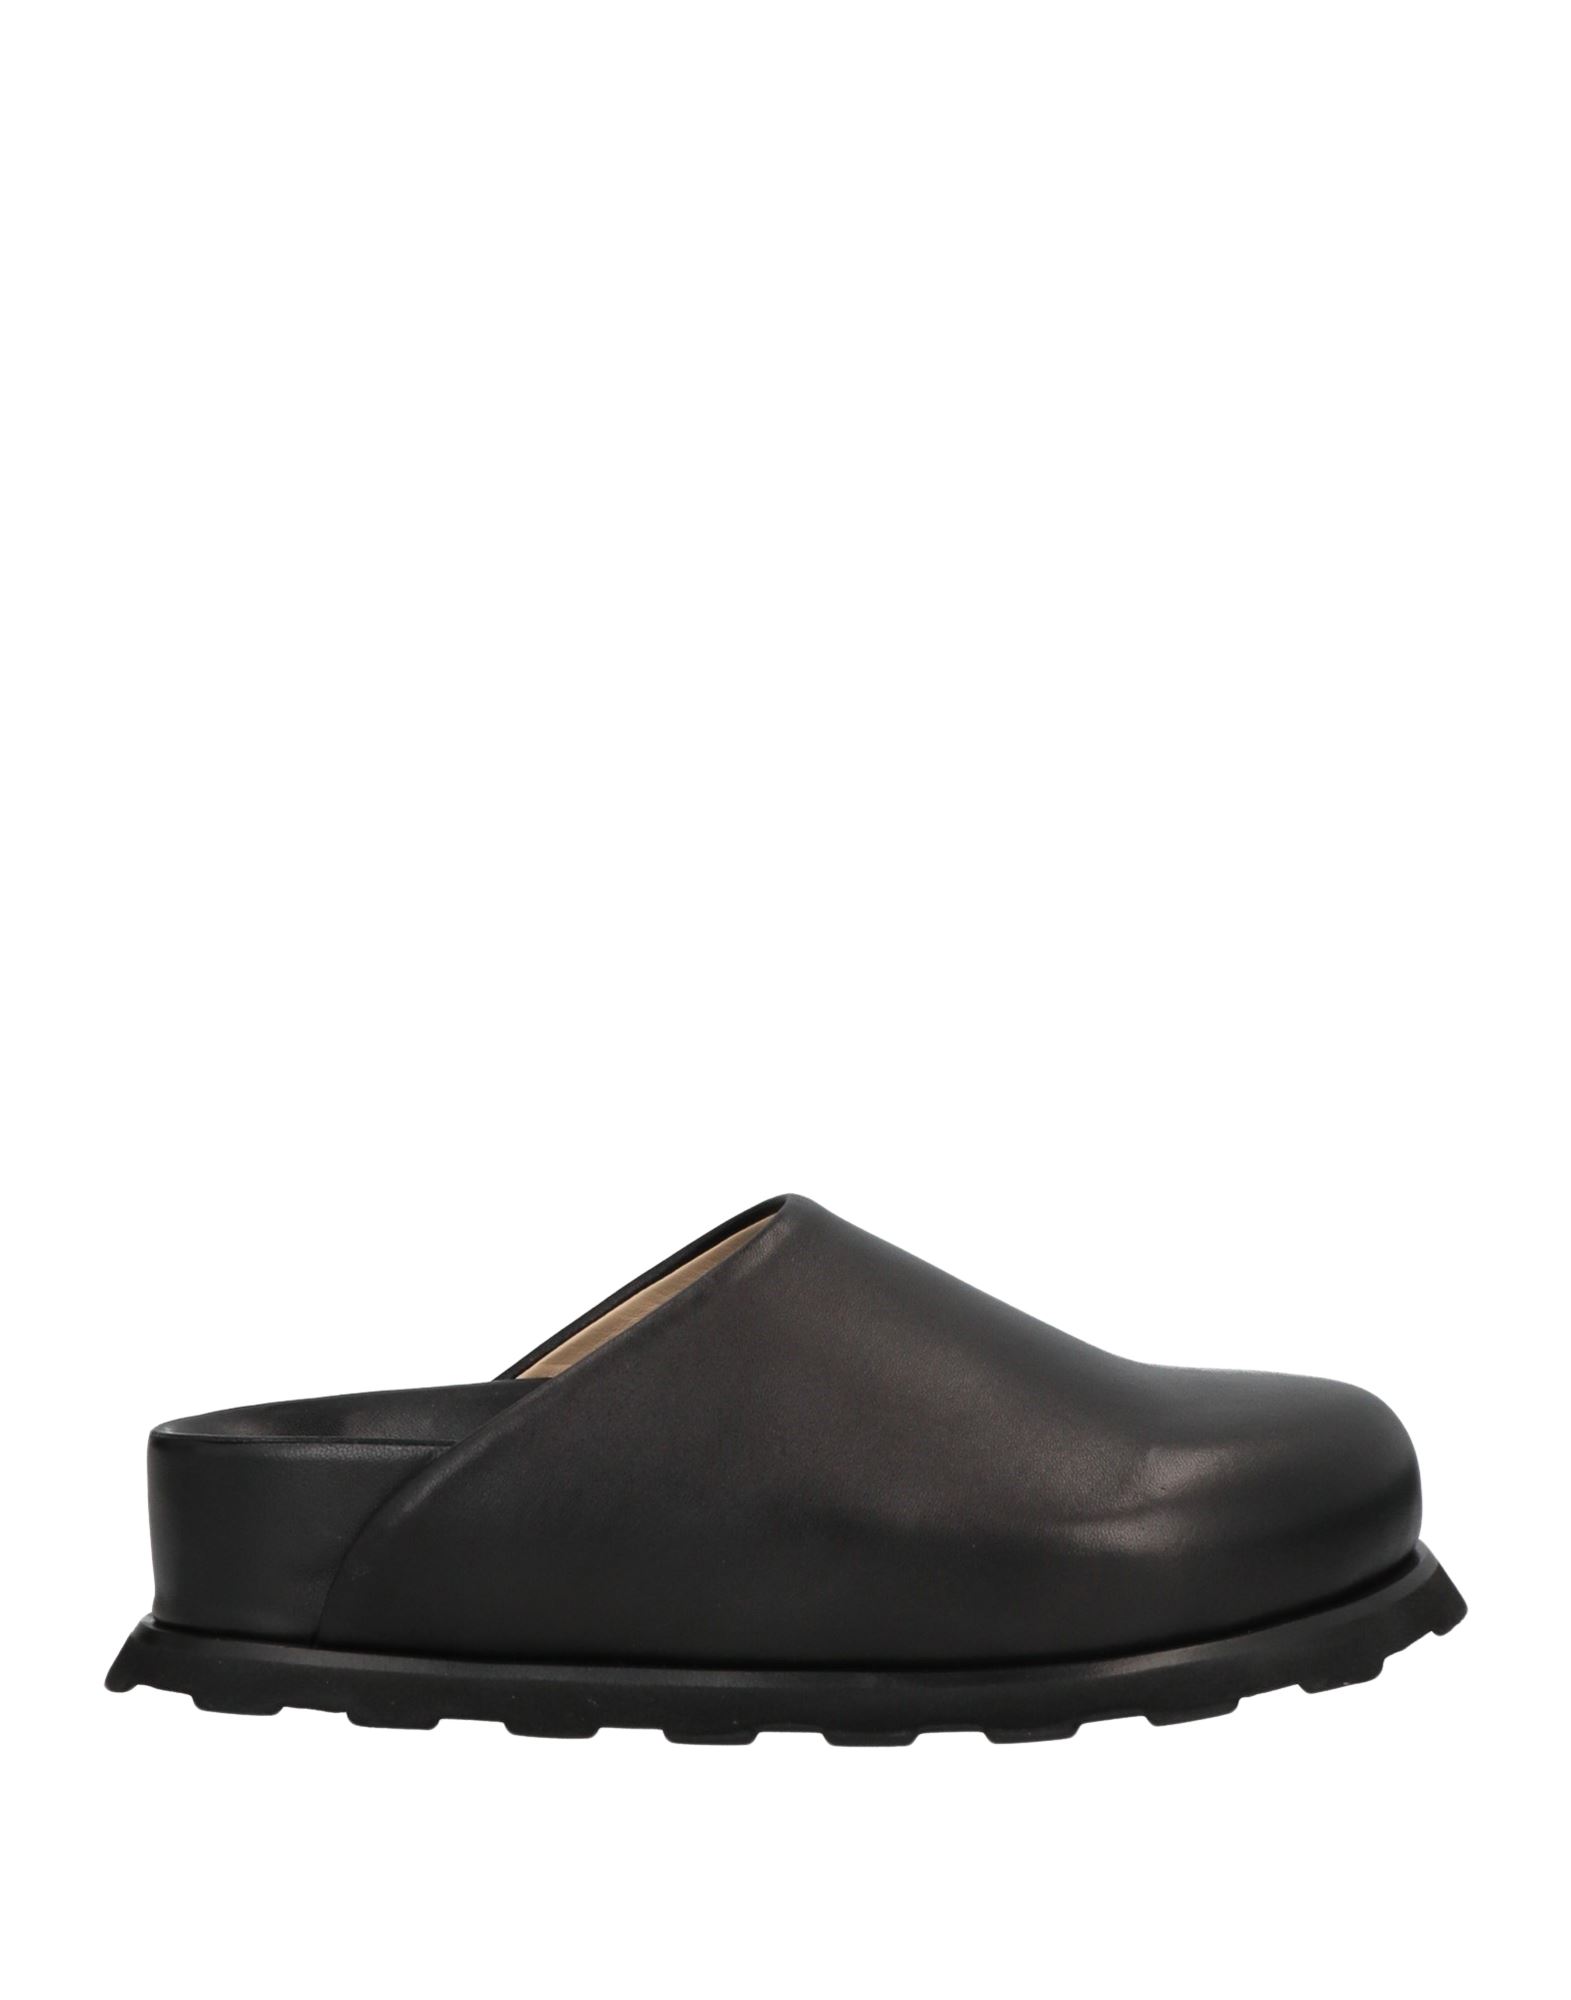 Proenza Schouler Woman Mules & Clogs Black Size 8 Soft Leather